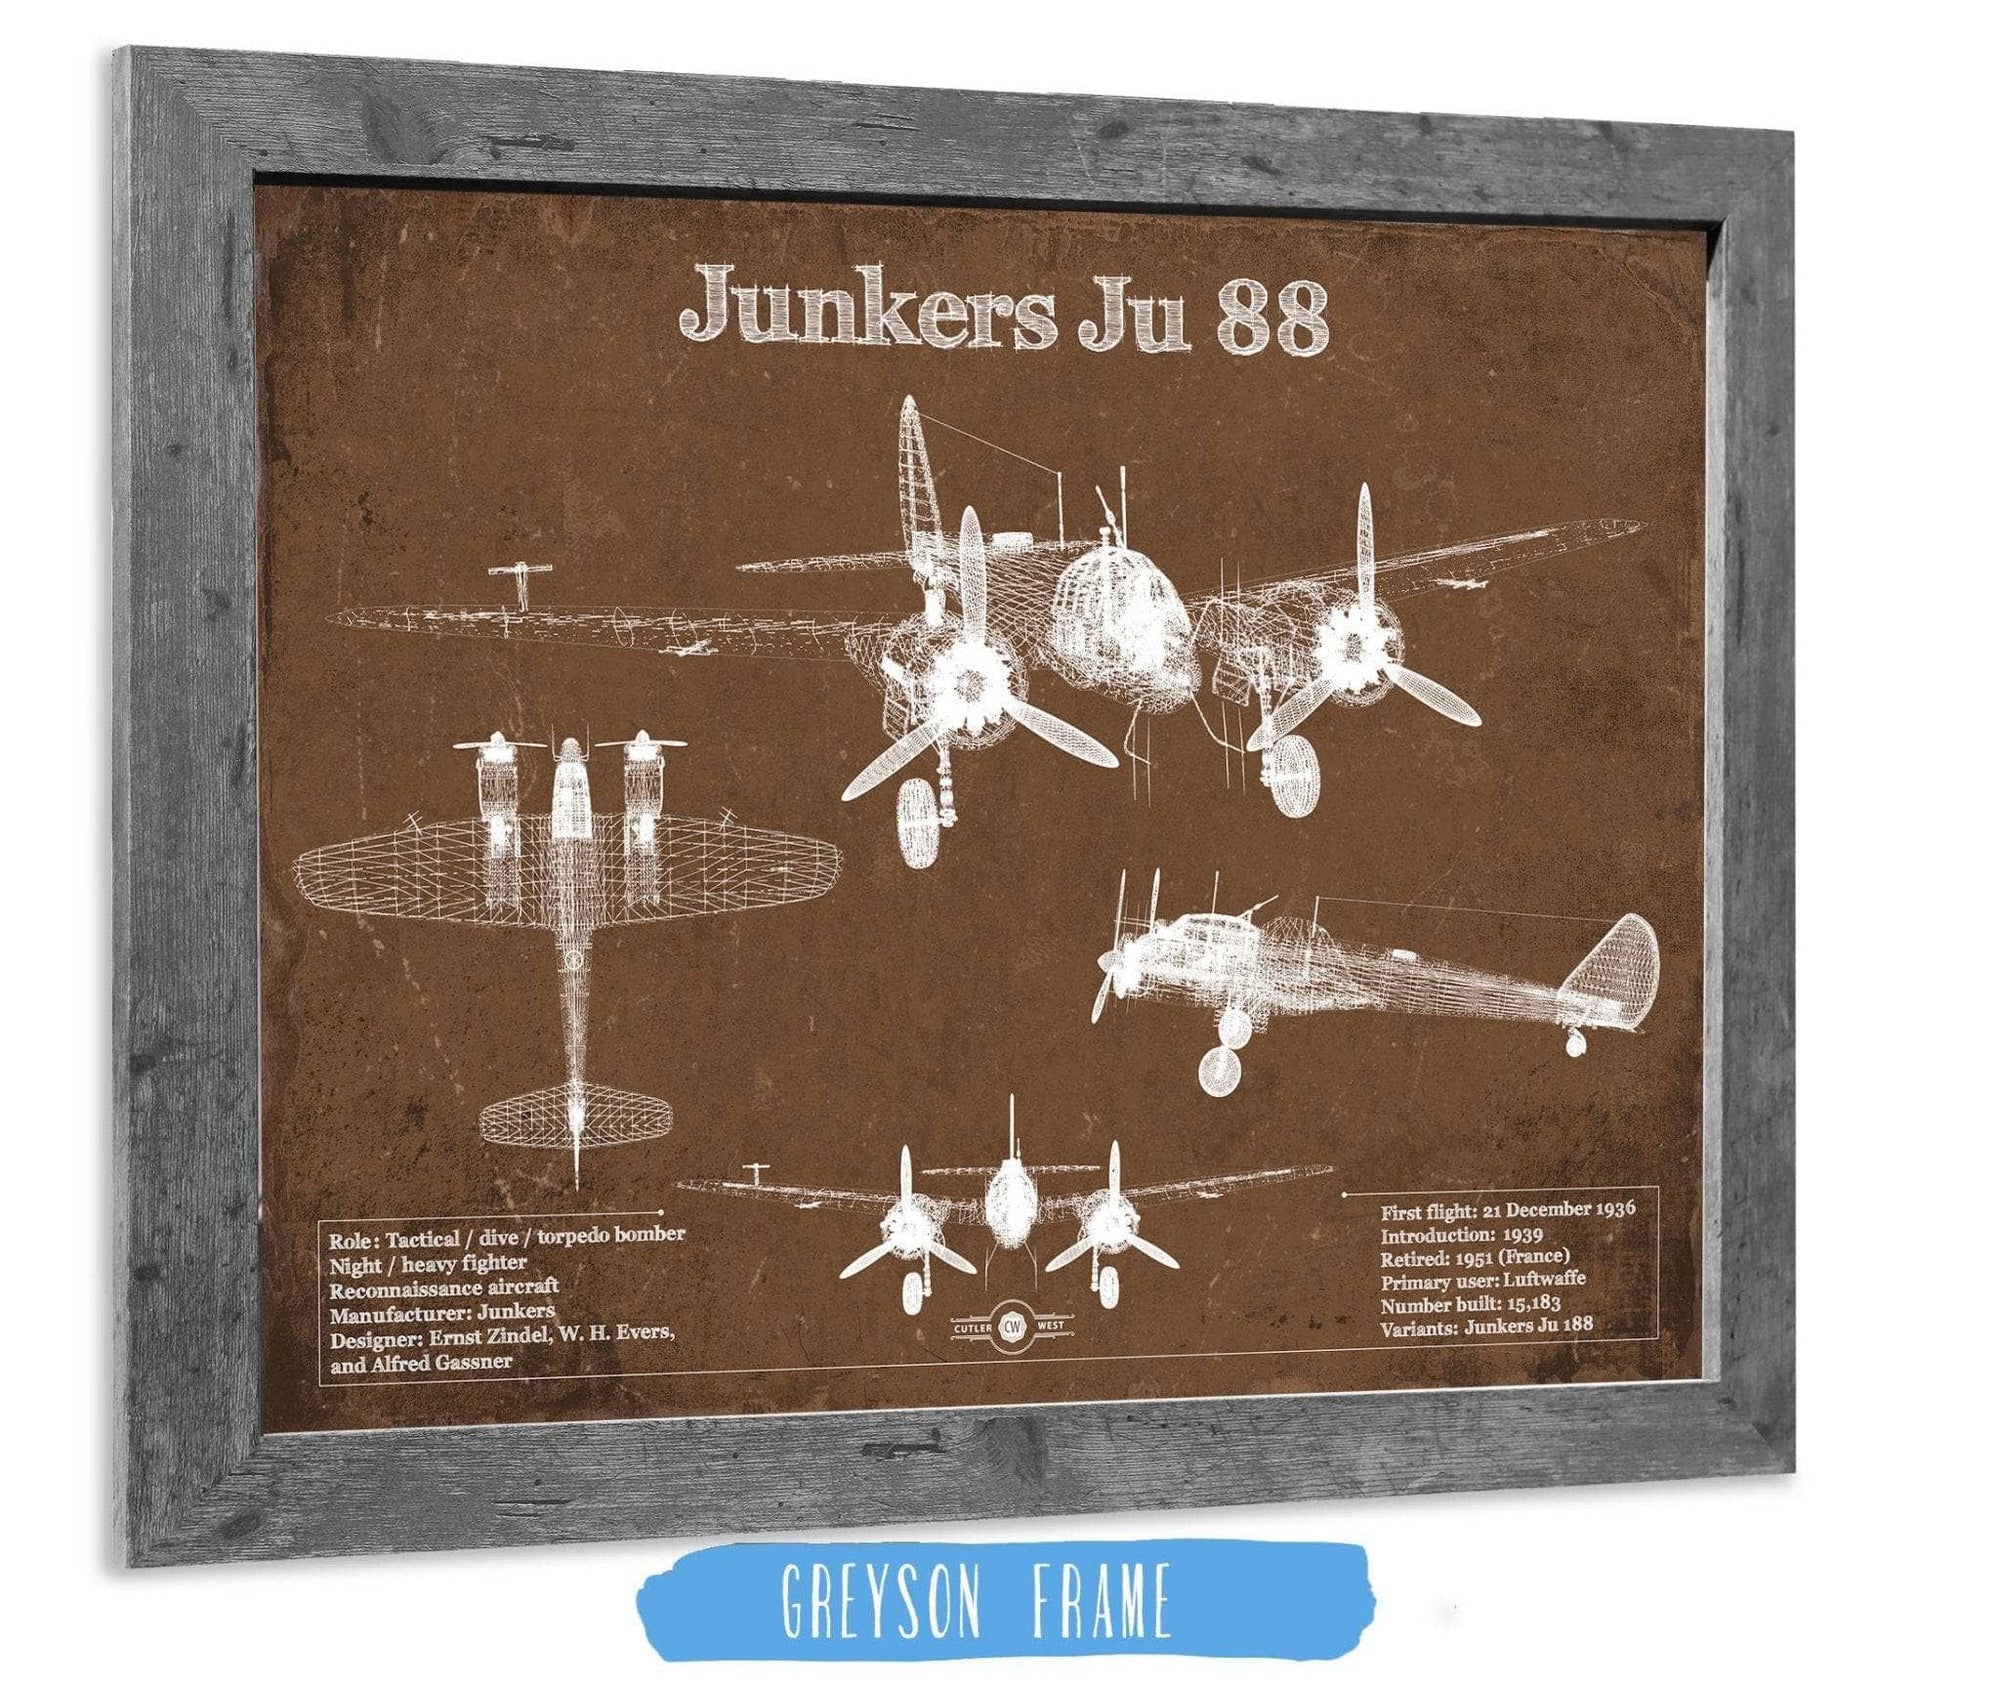 Cutler West Military Aircraft 14" x 11" / Greyson Frame Junkers Ju 88 WWII Combat Aircraft Vintage Blueprint Original Military Wall Art 933350048_16299